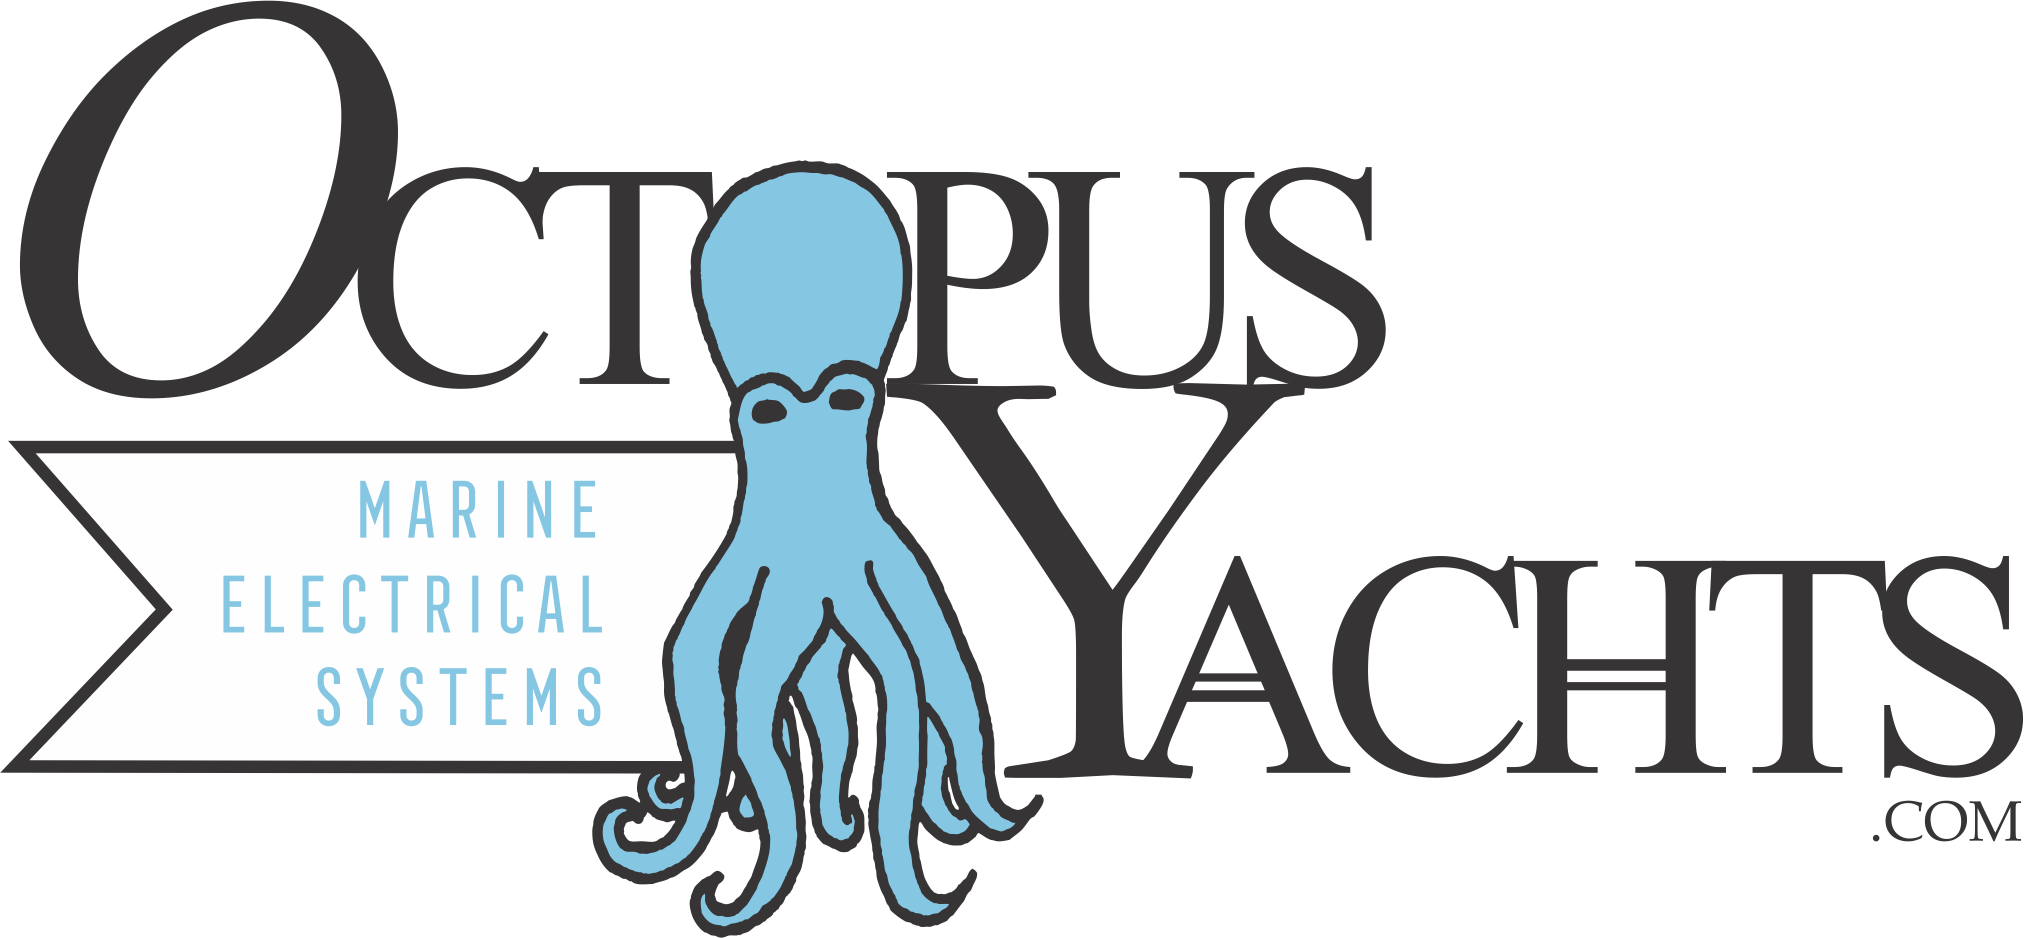 Octopus Yachts Logo